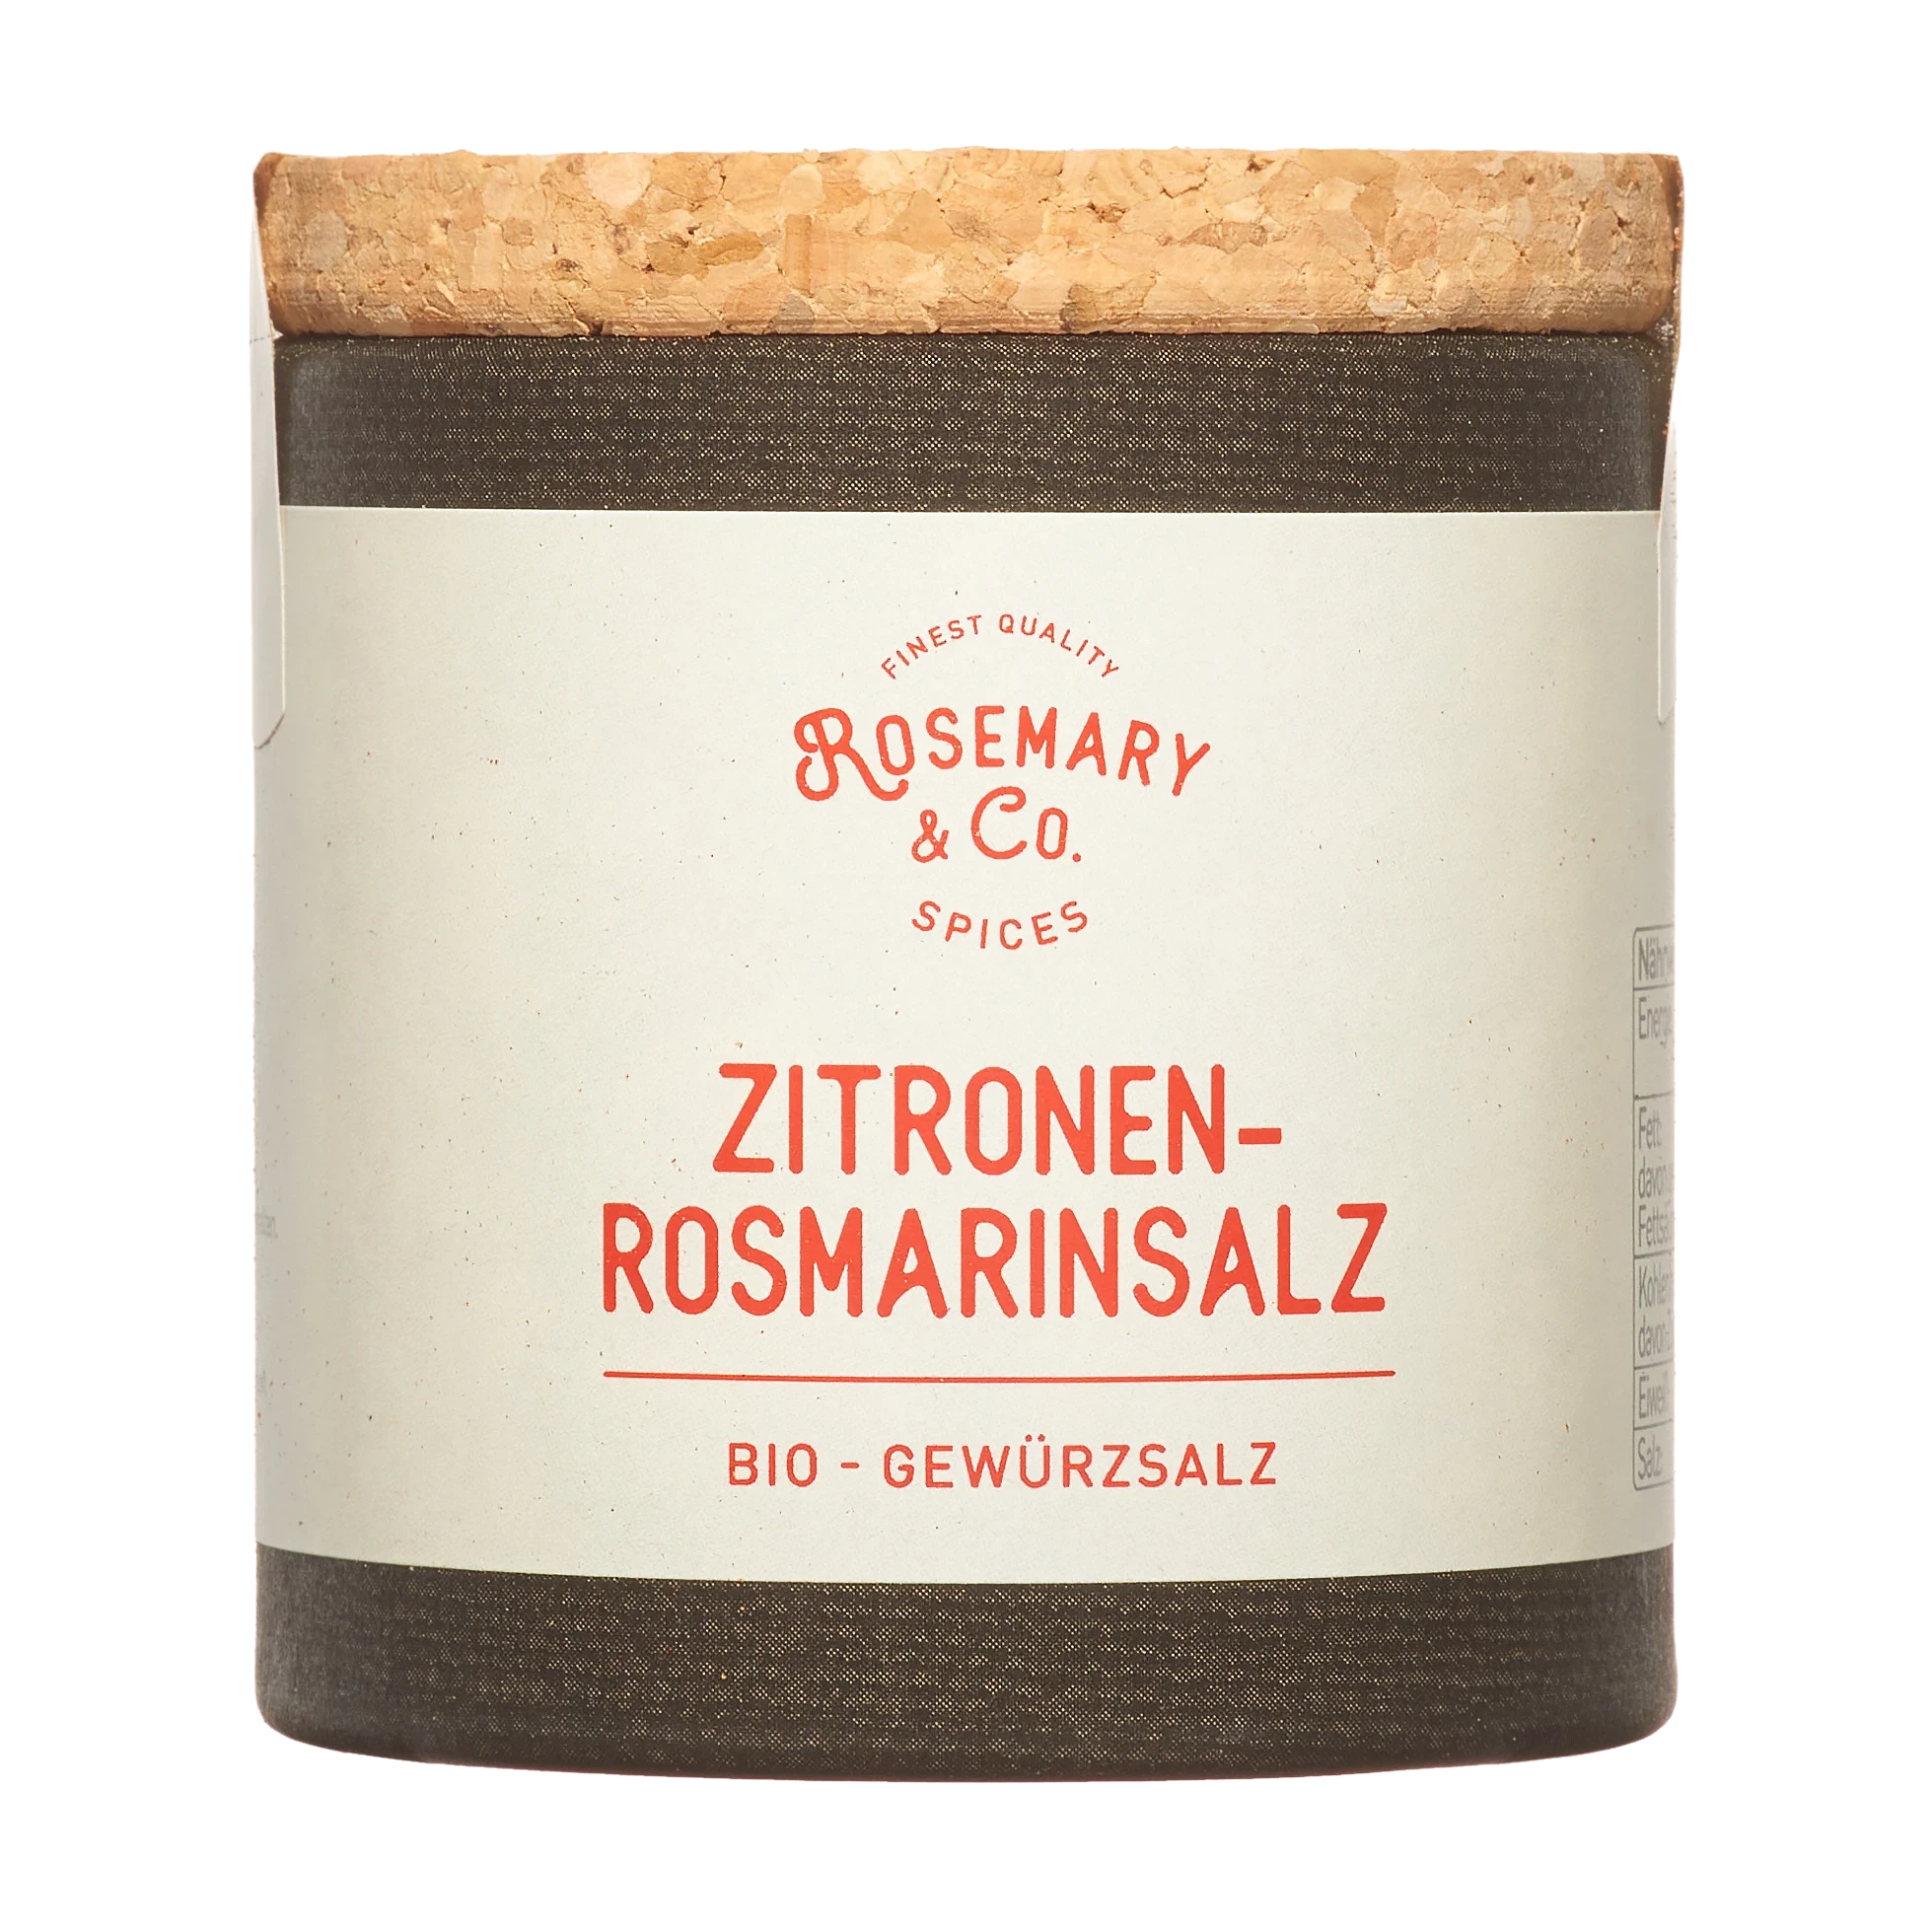 Rosemary Co Zintronen Rosmarinsalz Bio Gewuerzsalz Korkdose 55g 1